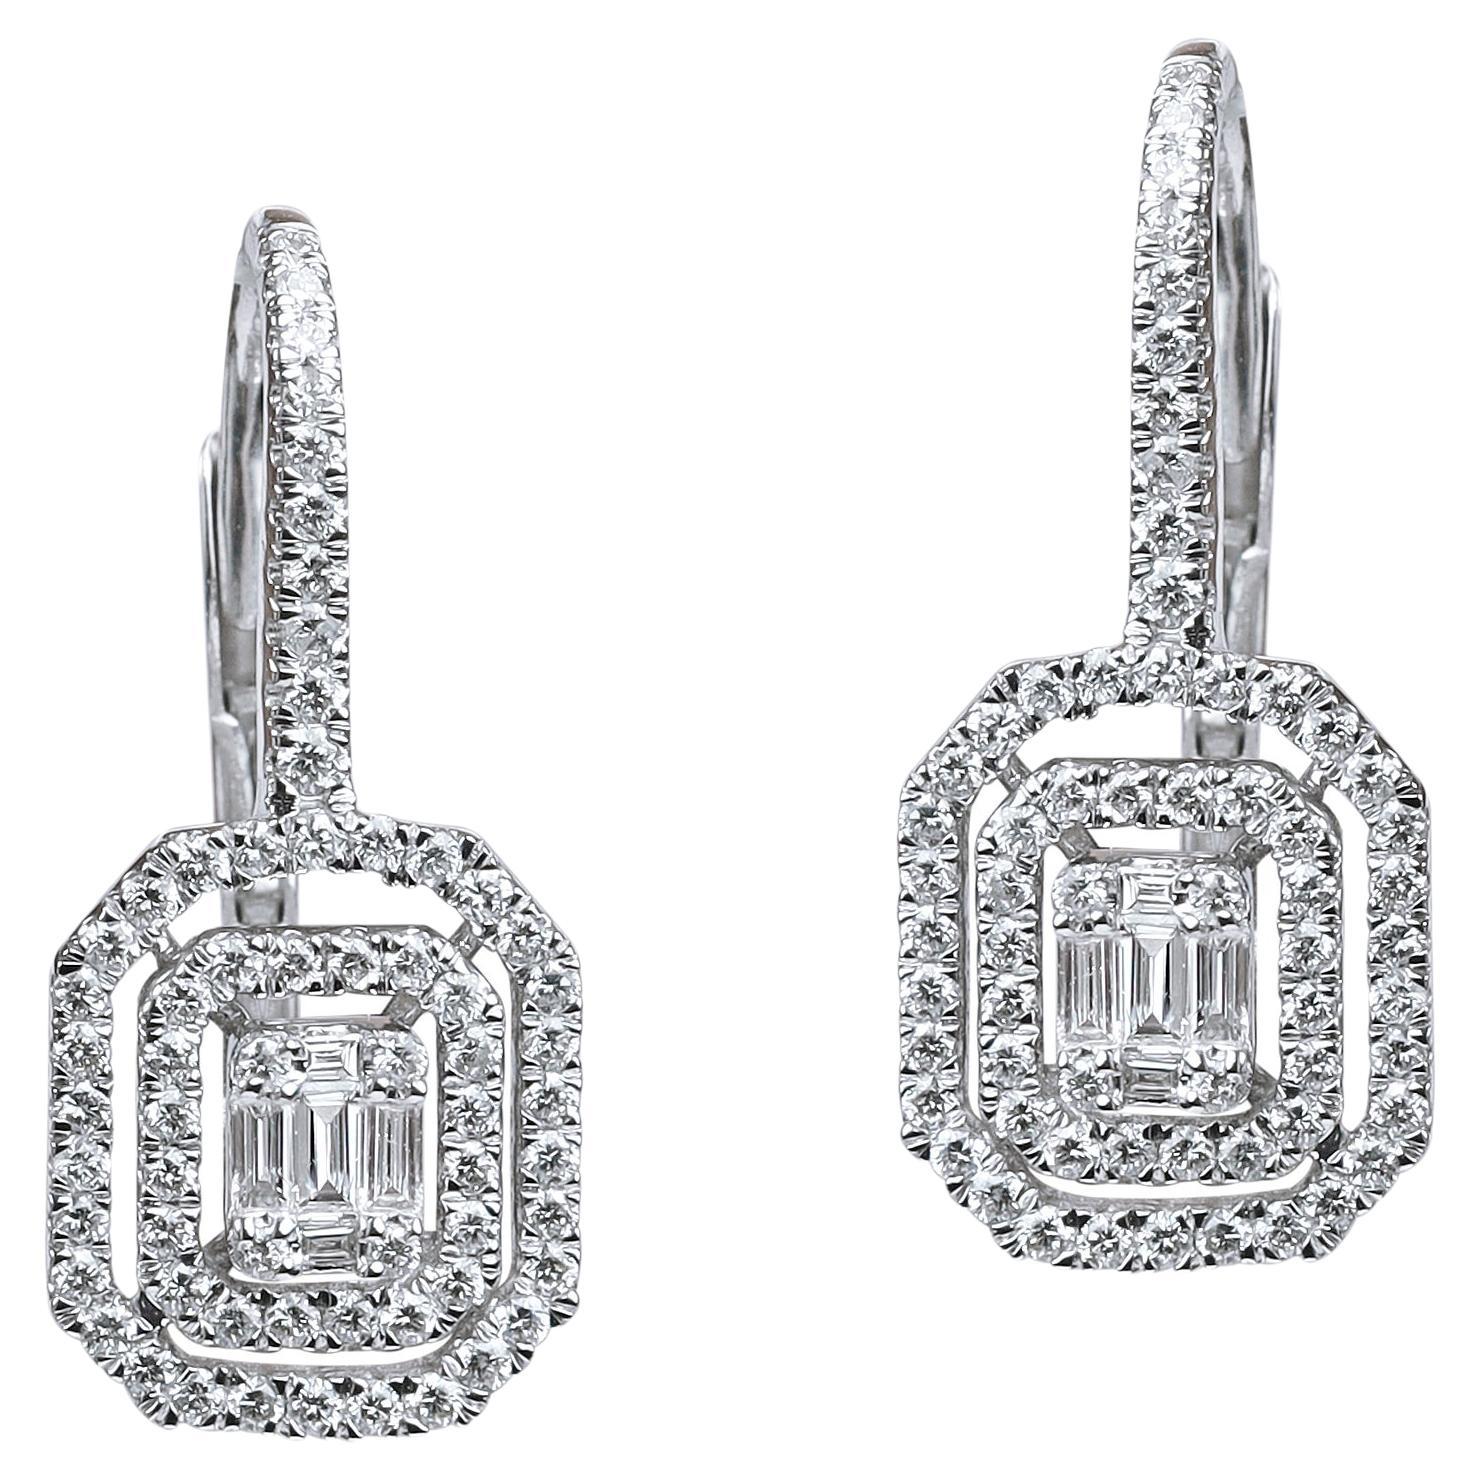 1 Karat Art Deco Diamant Baguette-Schliff Tropfen-Ohrringe mit Illusion-Fassung G VS